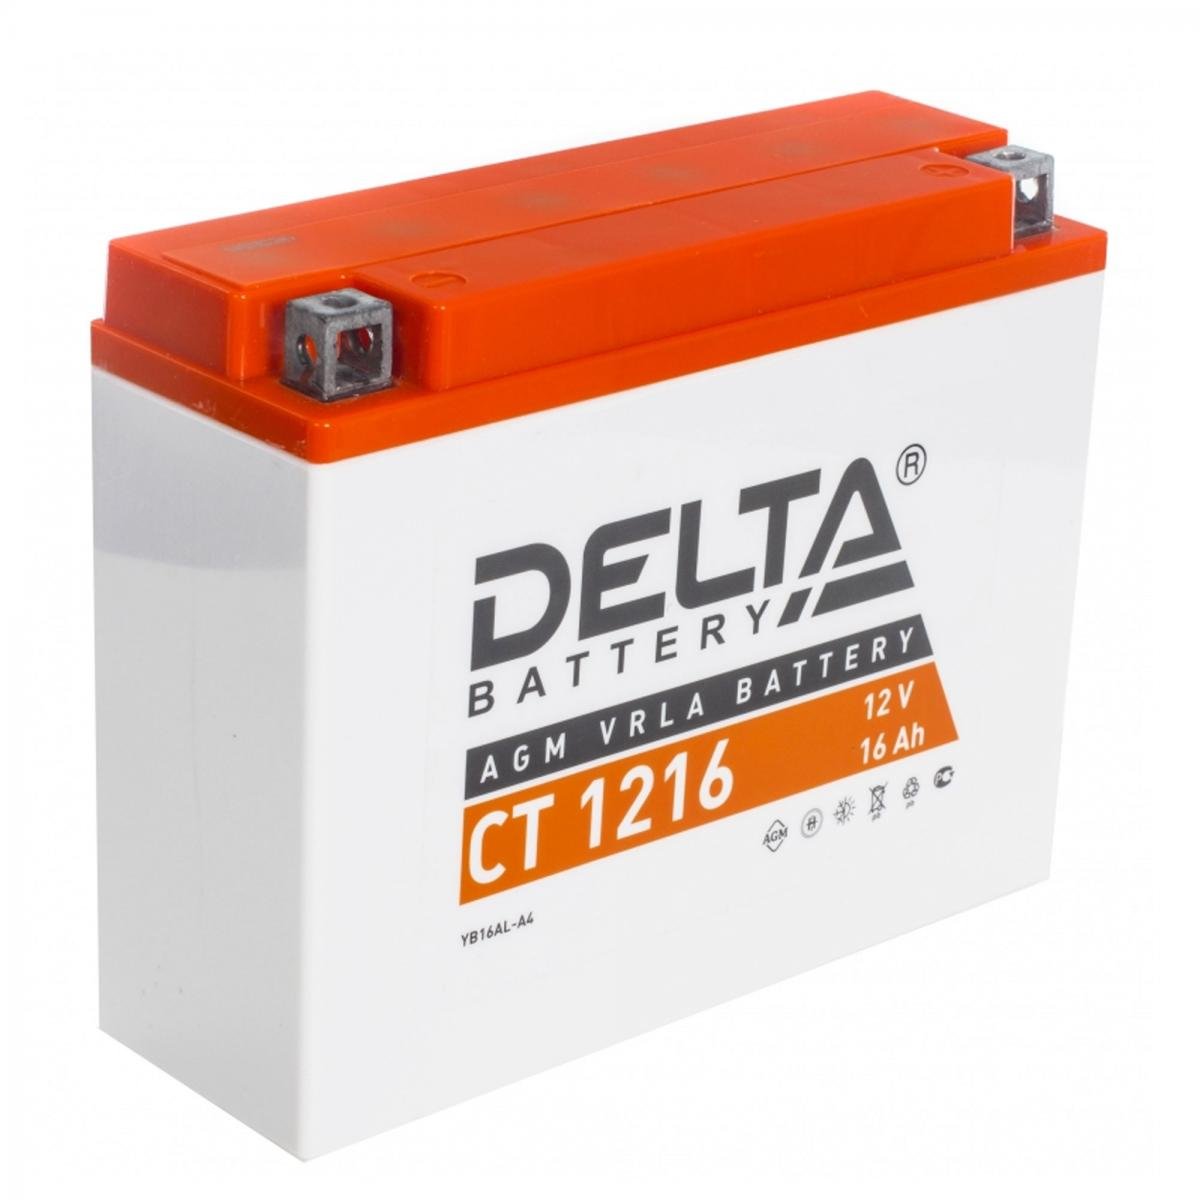 Аккумулятор Delta CT 1216